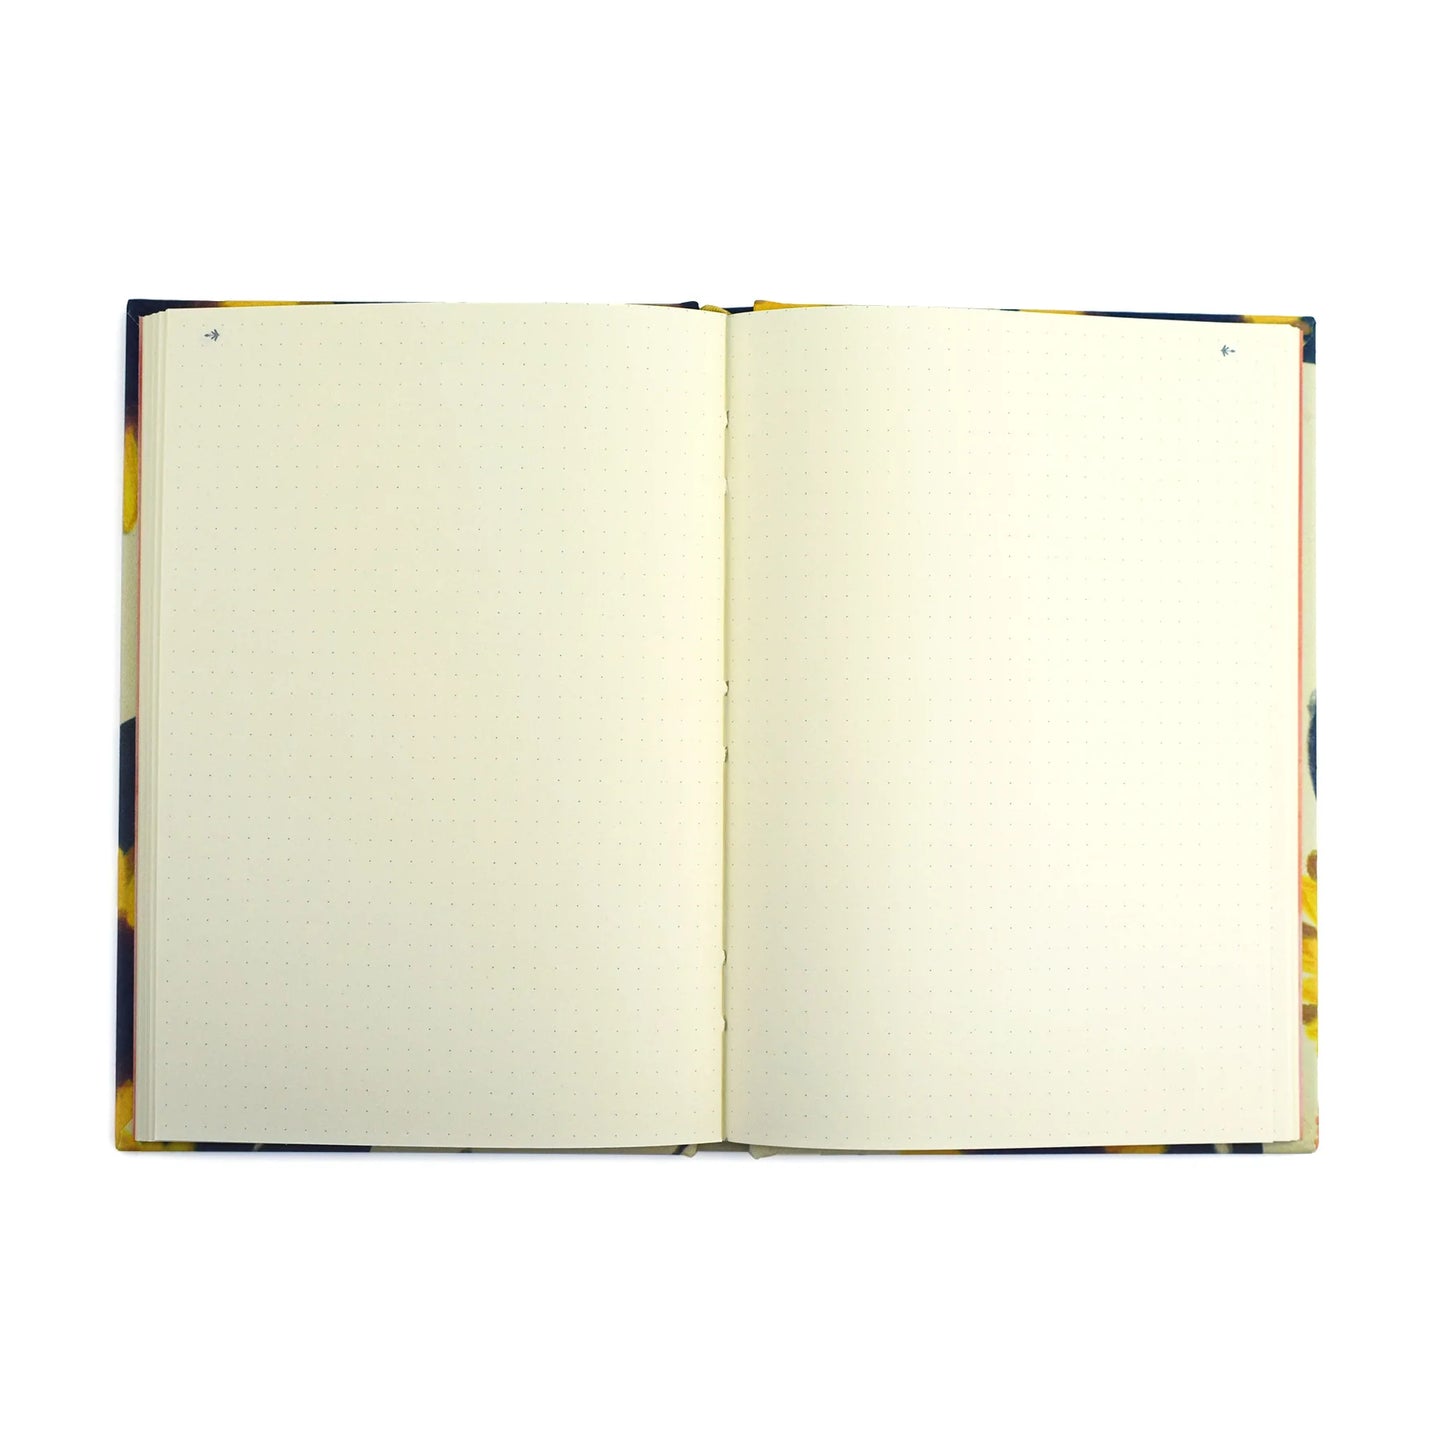 Hosana Revival Notebook: Savannah, Lined